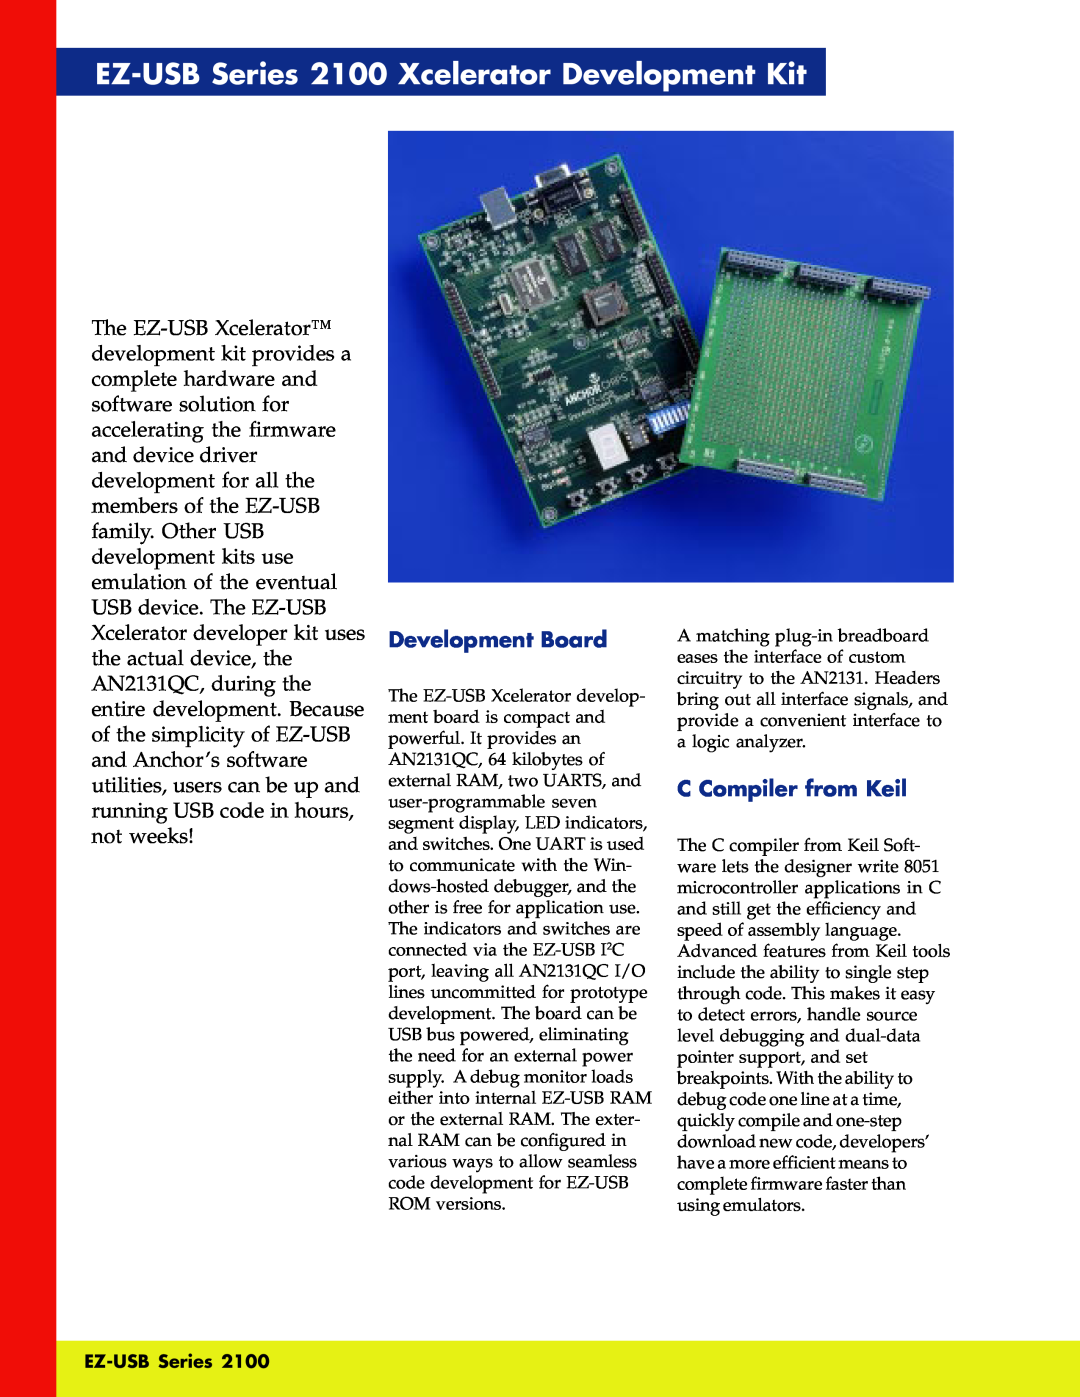 Cypress manual EZ-USB Series 2100 Xcelerator Development Kit, Development Board, C Compiler from Keil 